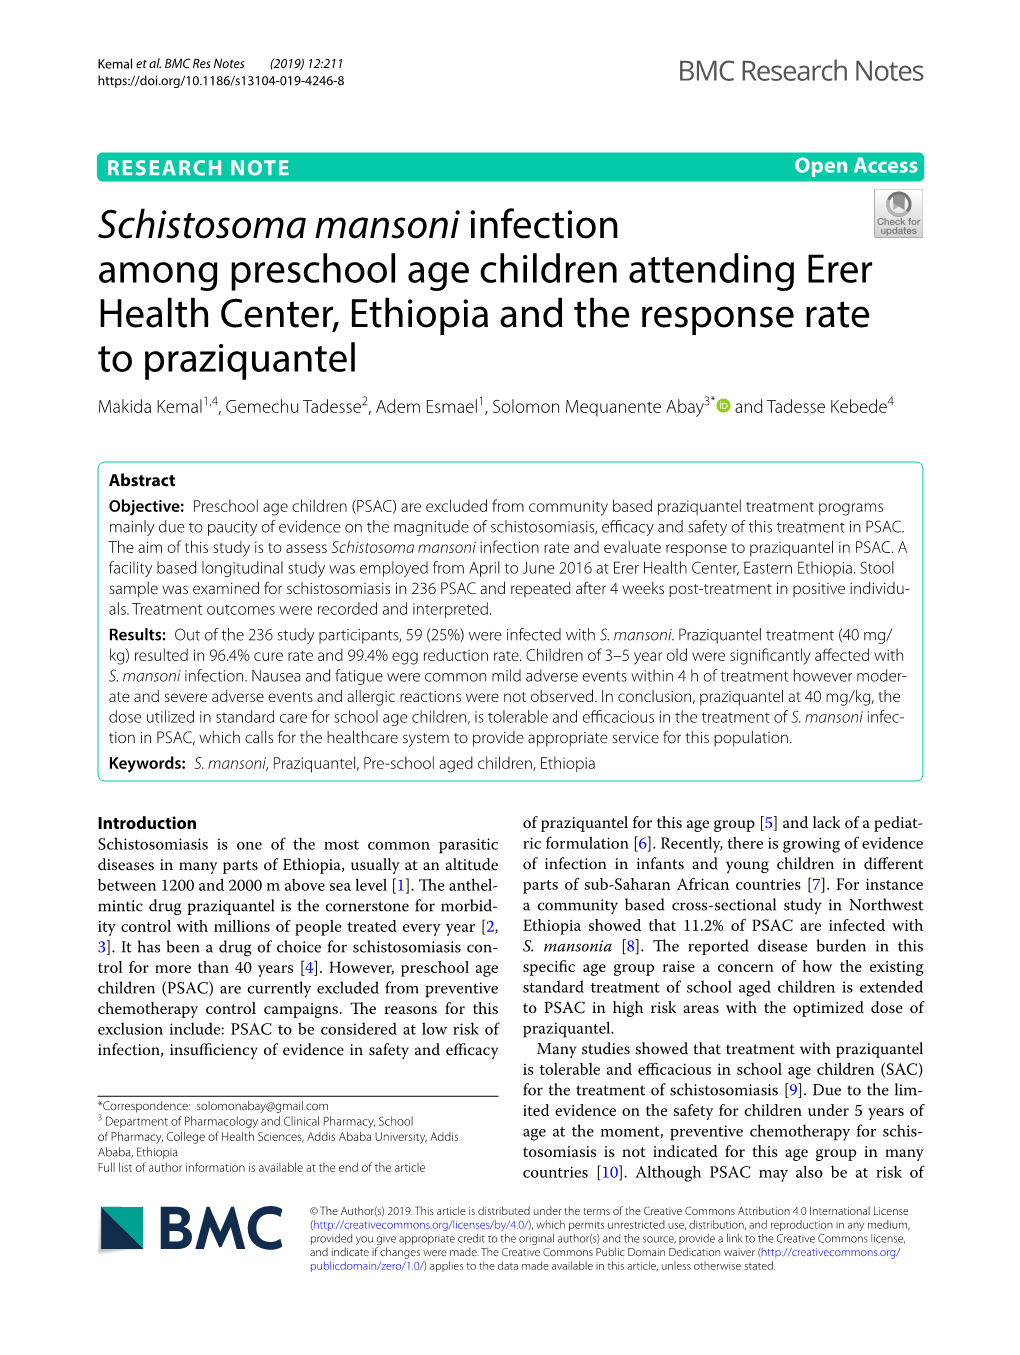 Schistosoma Mansoni Infection Among Preschool Age Children